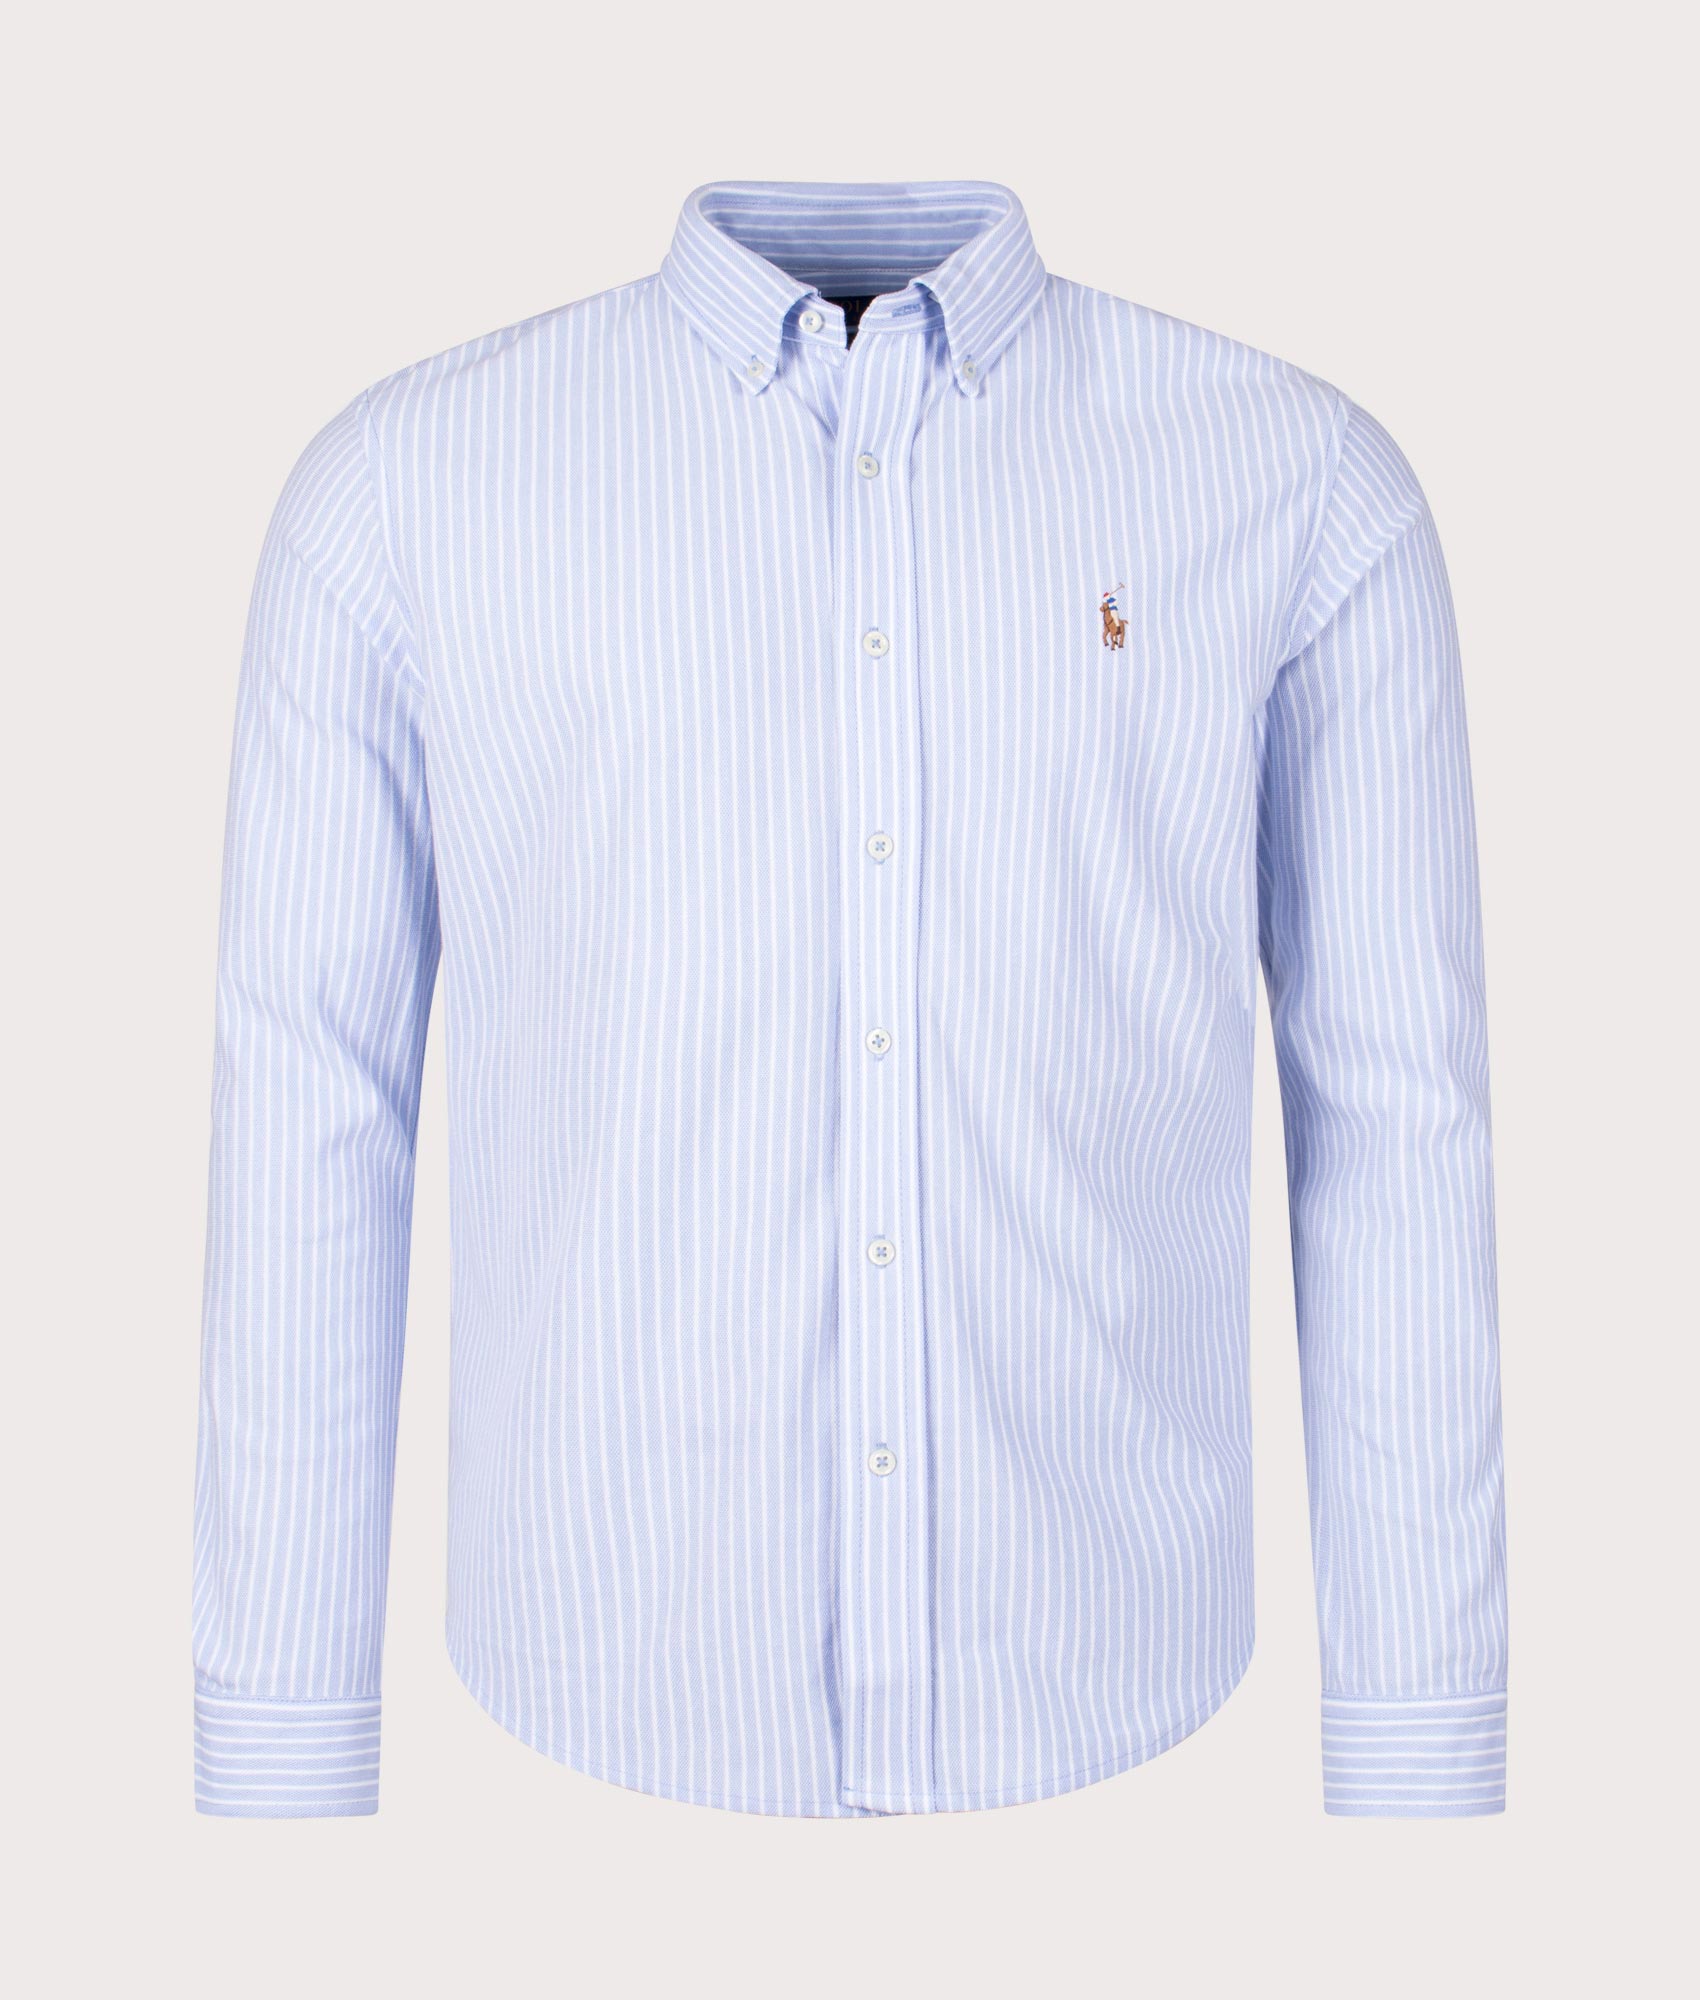 Polo Ralph Lauren Mens Mesh Sport Striped Shirt - Colour: 002 Dress Shirt Blue/White - Size: Large